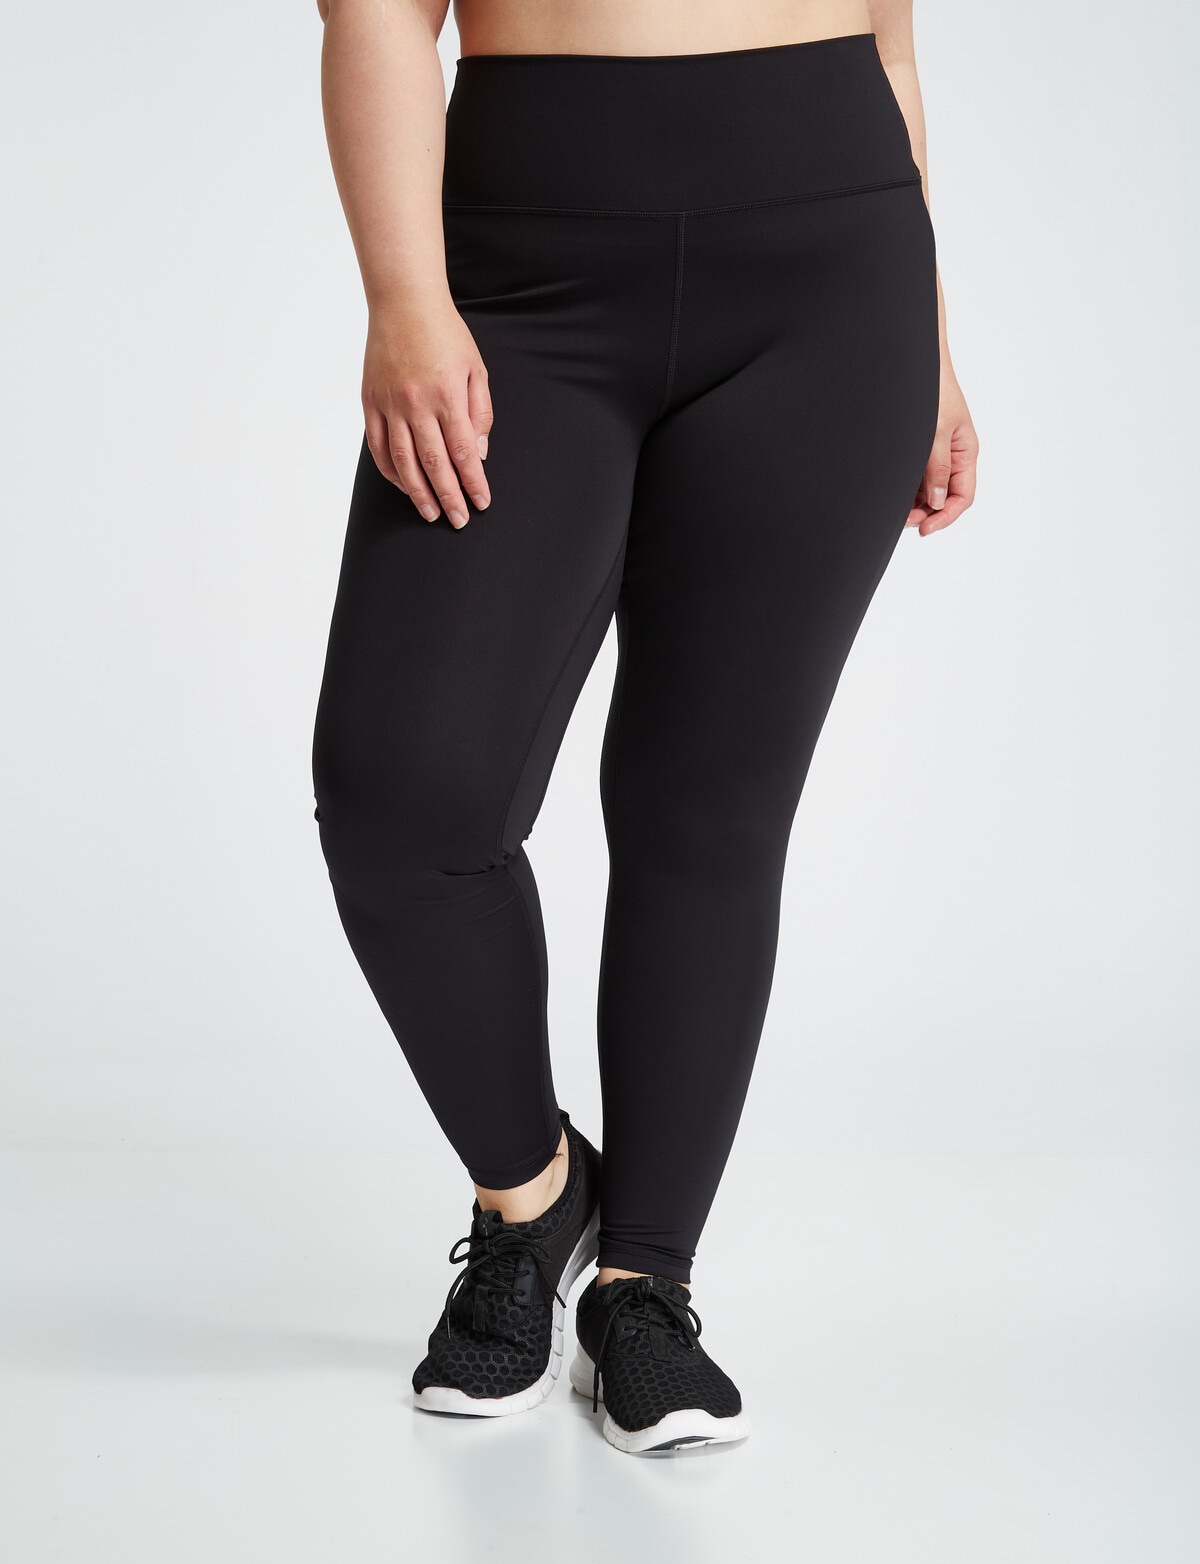 Superfit Curve Active Full-Length Legging, Black - Jeans, Pants & Shorts